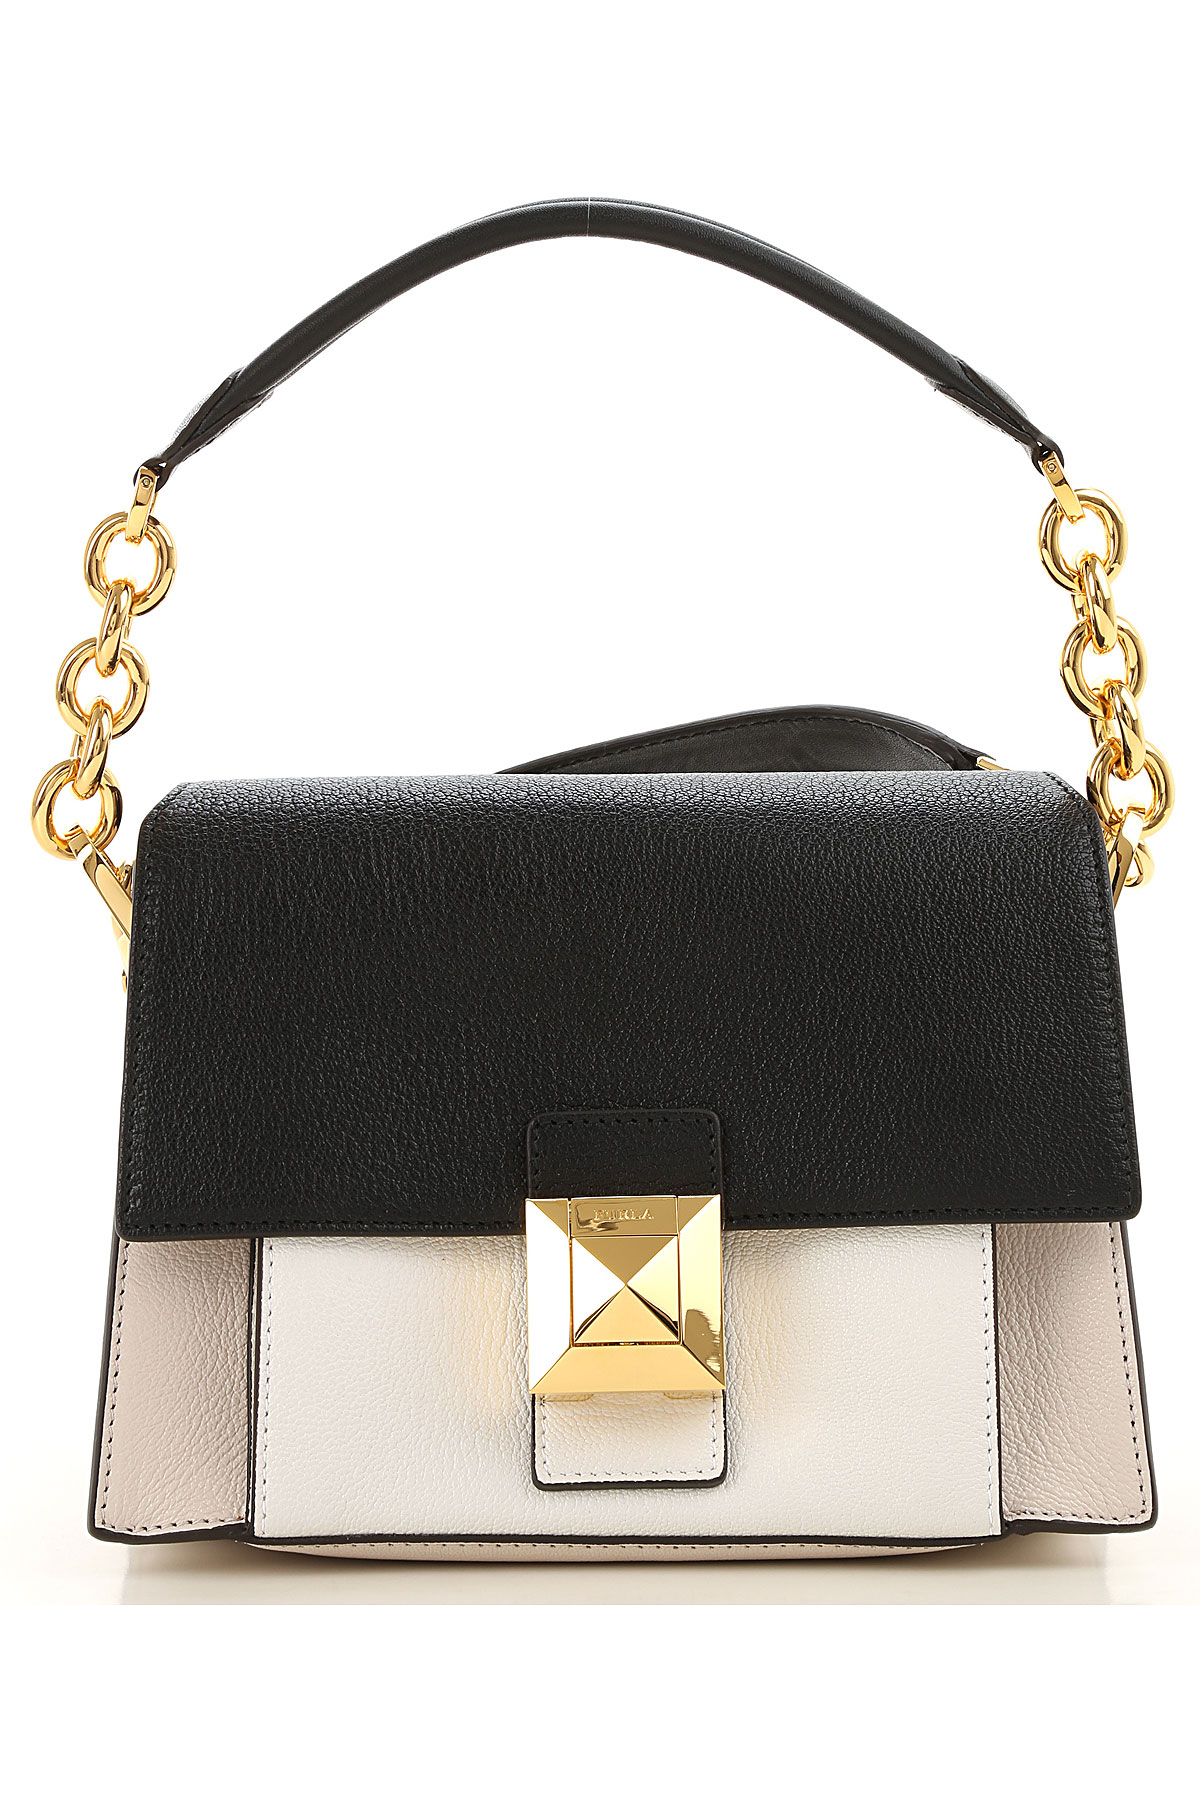 Handbags Furla, Style code: 1021523--